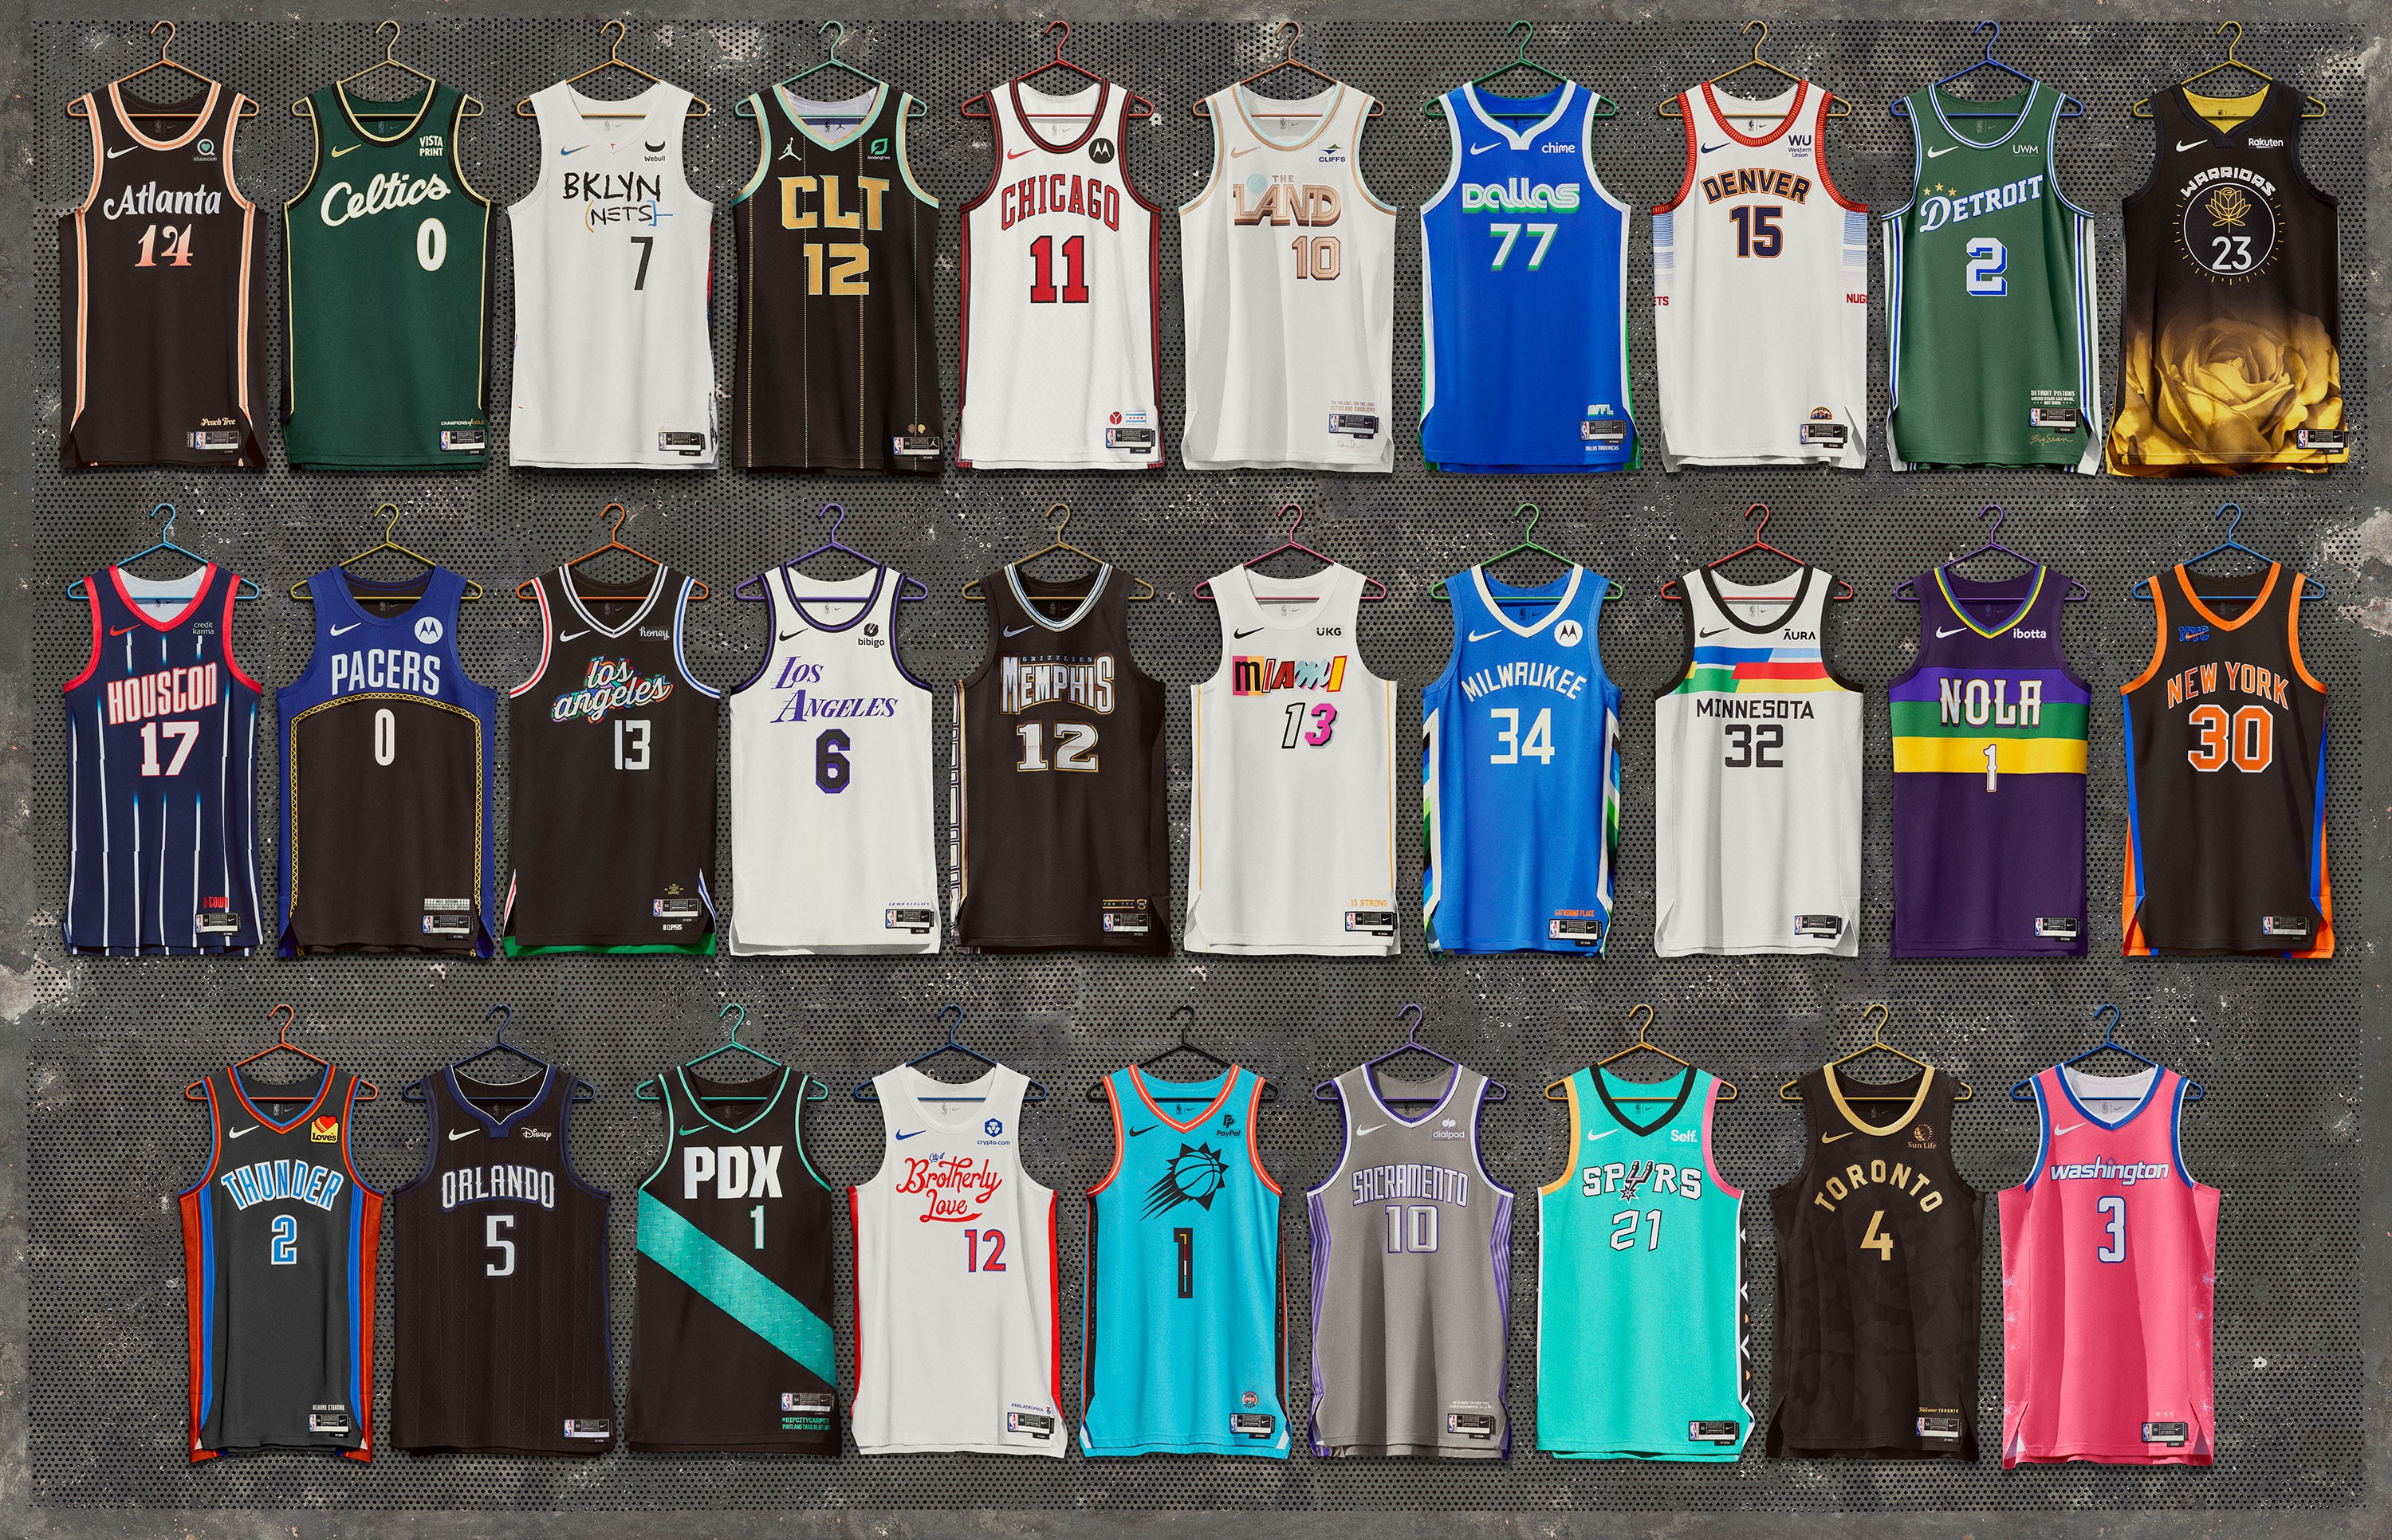 2022 NBA All-Star jerseys: Nike celebrates NBA's 75th season, city